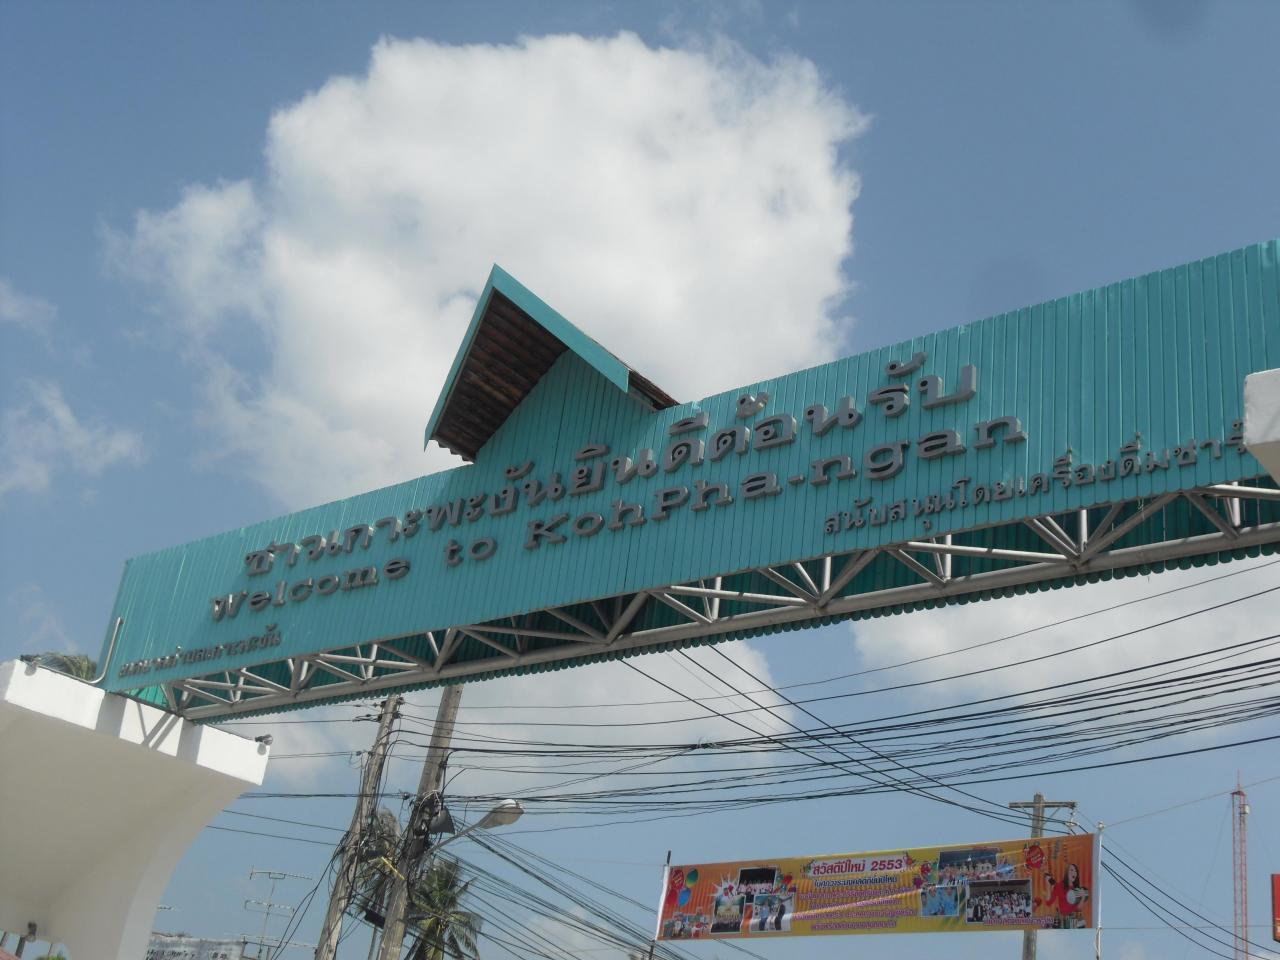 Welcome to Koh Pha ngan, sign in Thong Sala near pier